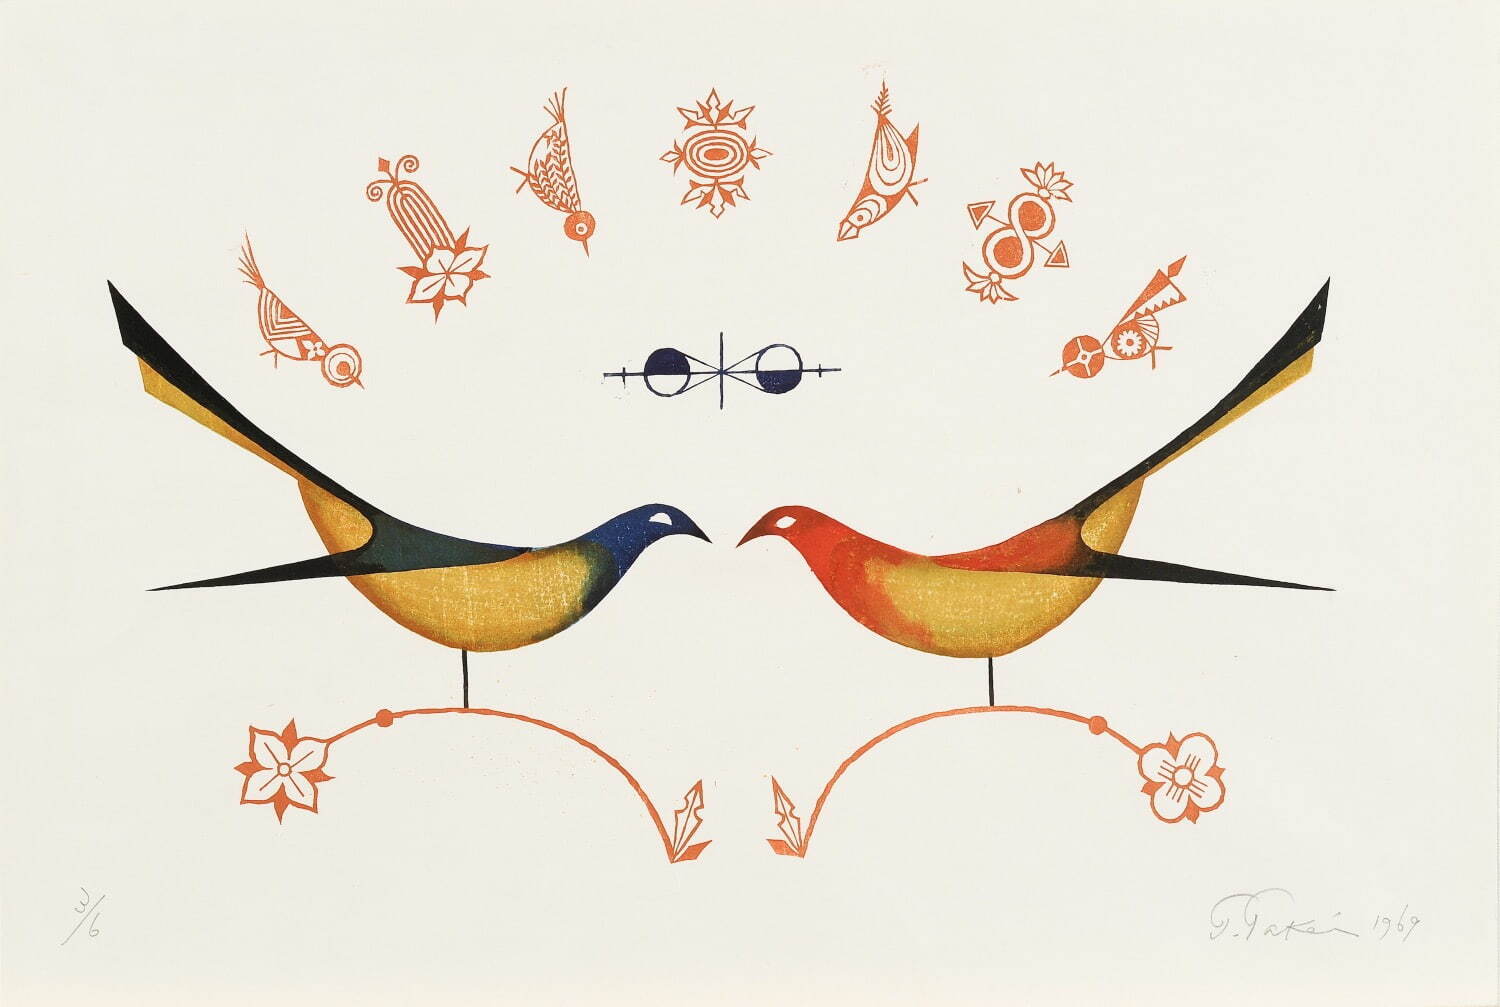 武井武雄 《鳥の連作 No.7》 1969年 木版画
© 岡谷市／イルフ童画館